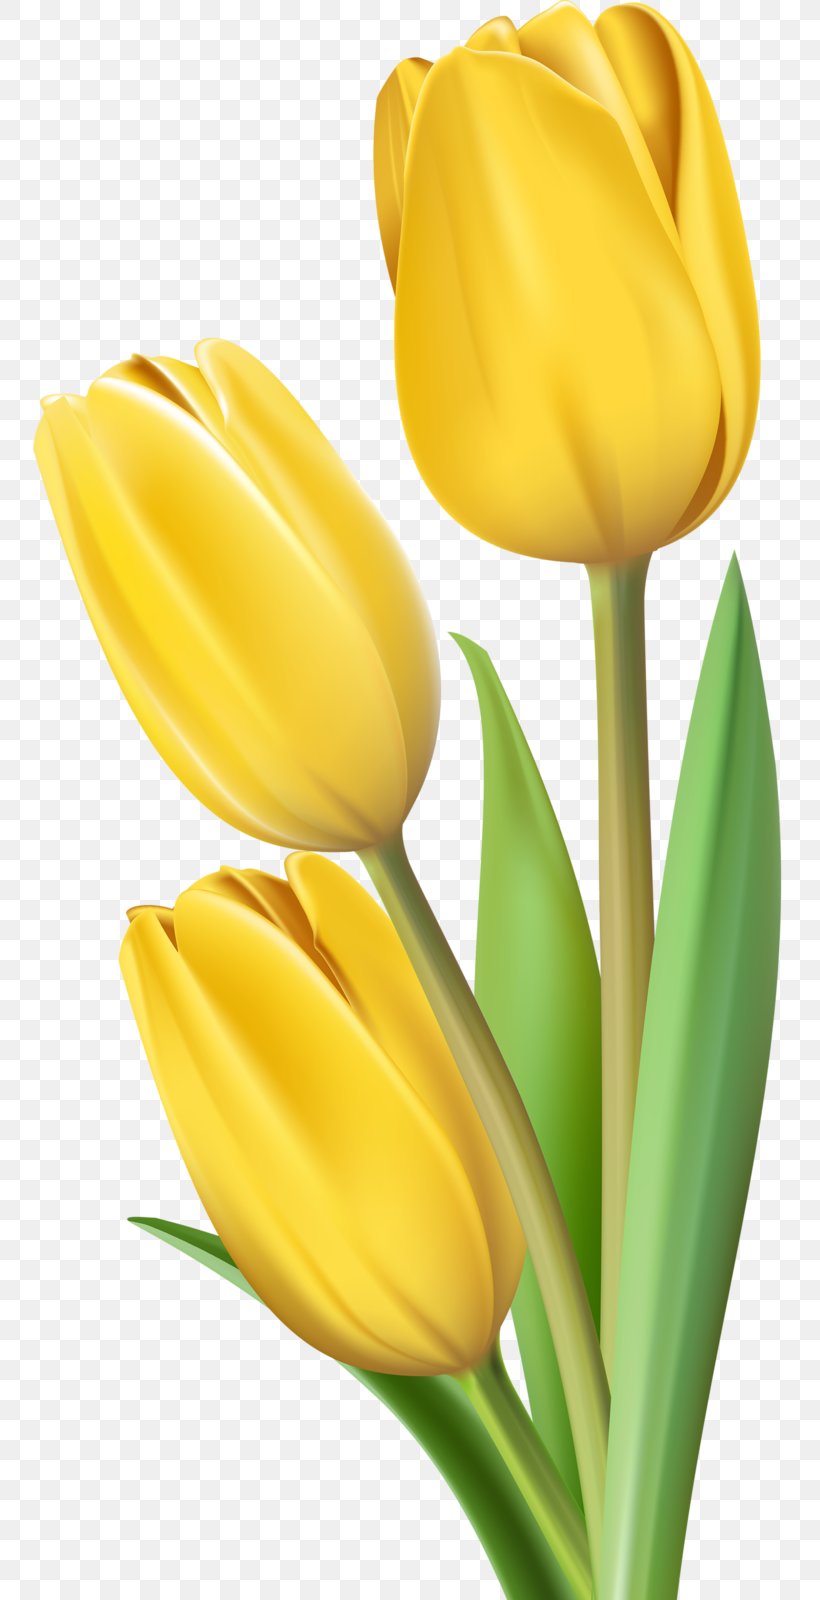 Indira Gandhi Memorial Tulip Garden Clip Art Openclipart, PNG, 753x1600px, Indira Gandhi Memorial Tulip Garden, Bud, Cut Flowers, Drawing, Floral Design Download Free